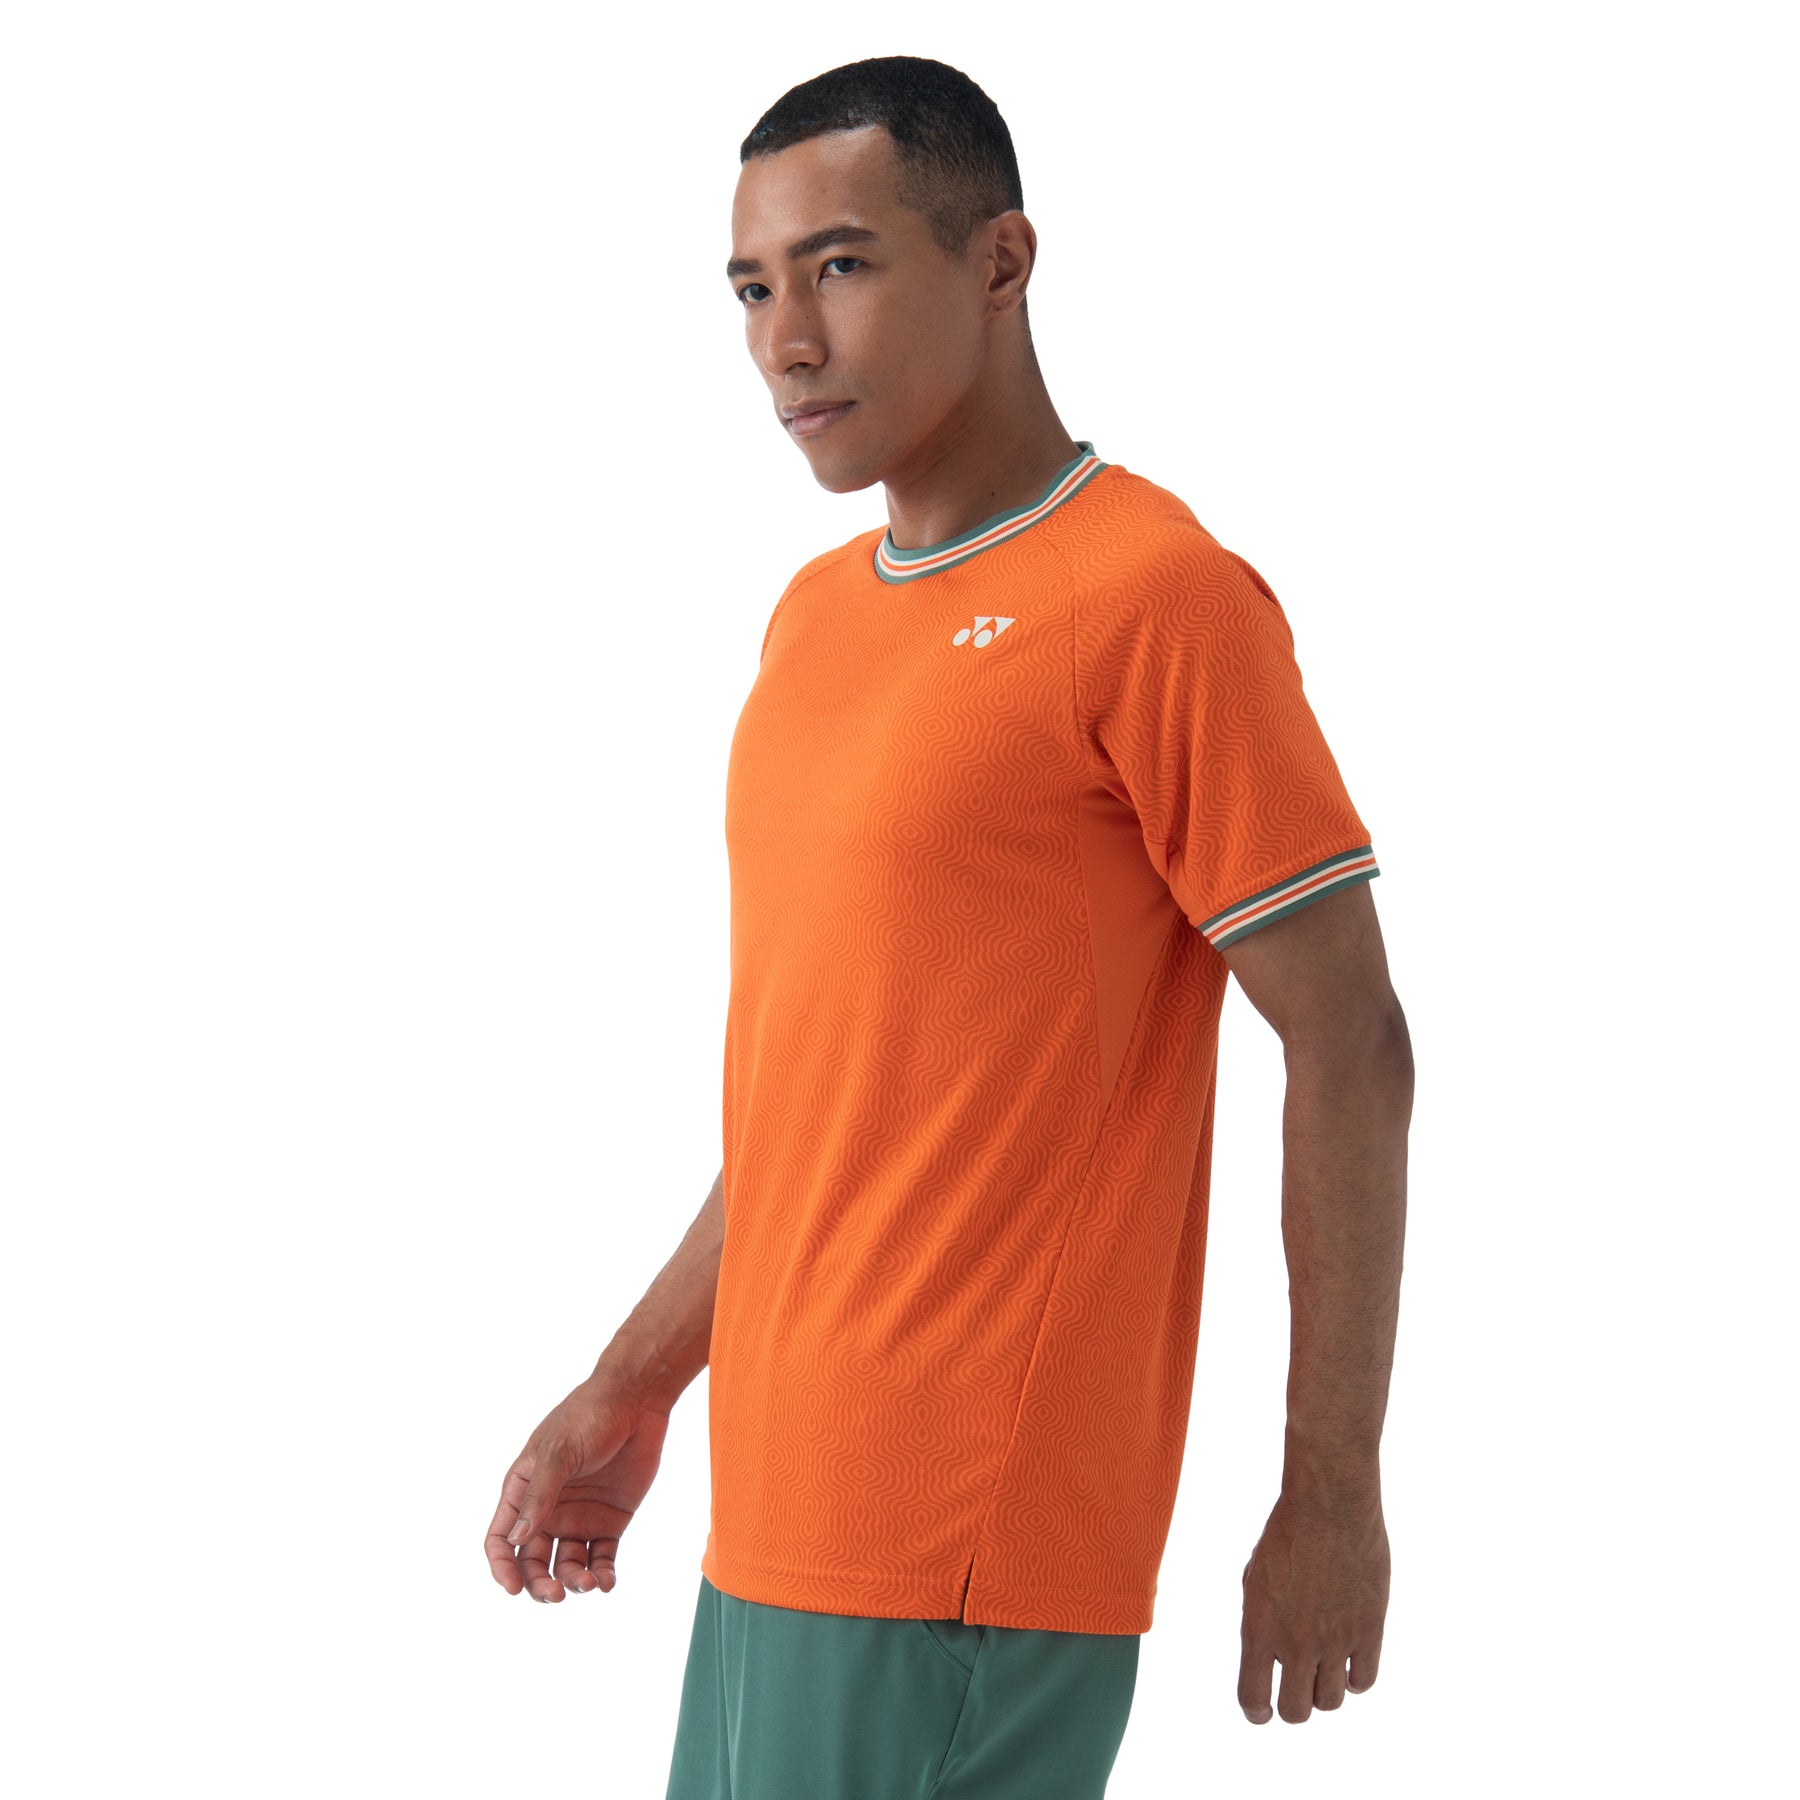 Yonex 10560 Crew Neck Shirt Mens (Bright Orange)